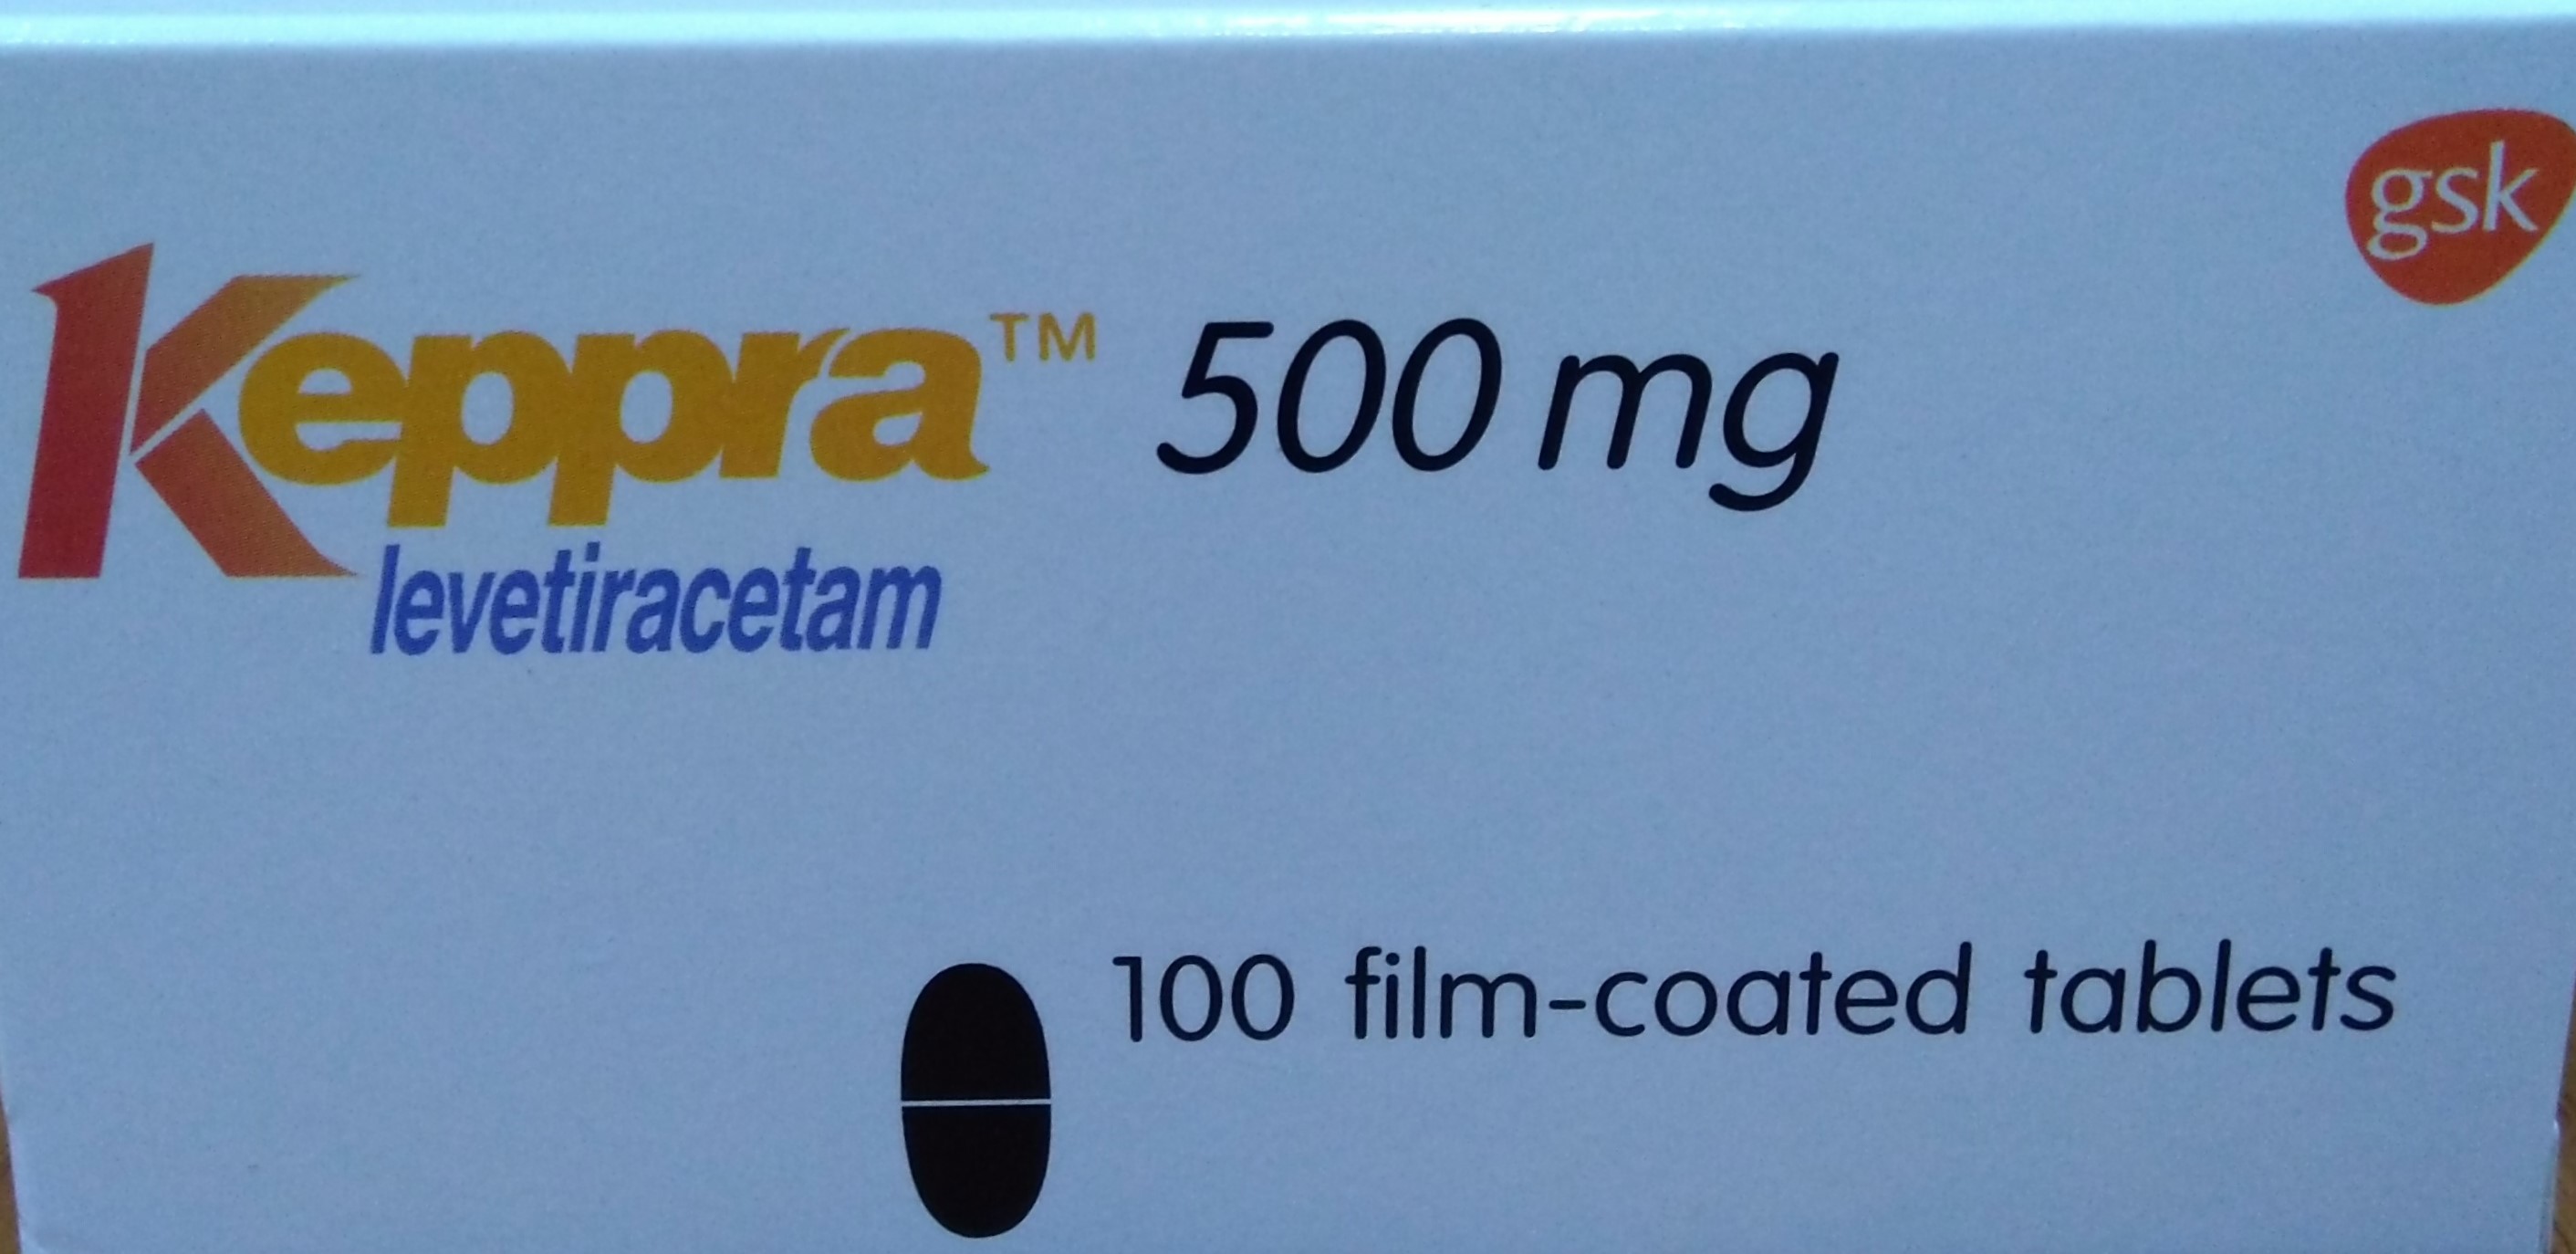 Keppra Tablets 500mg